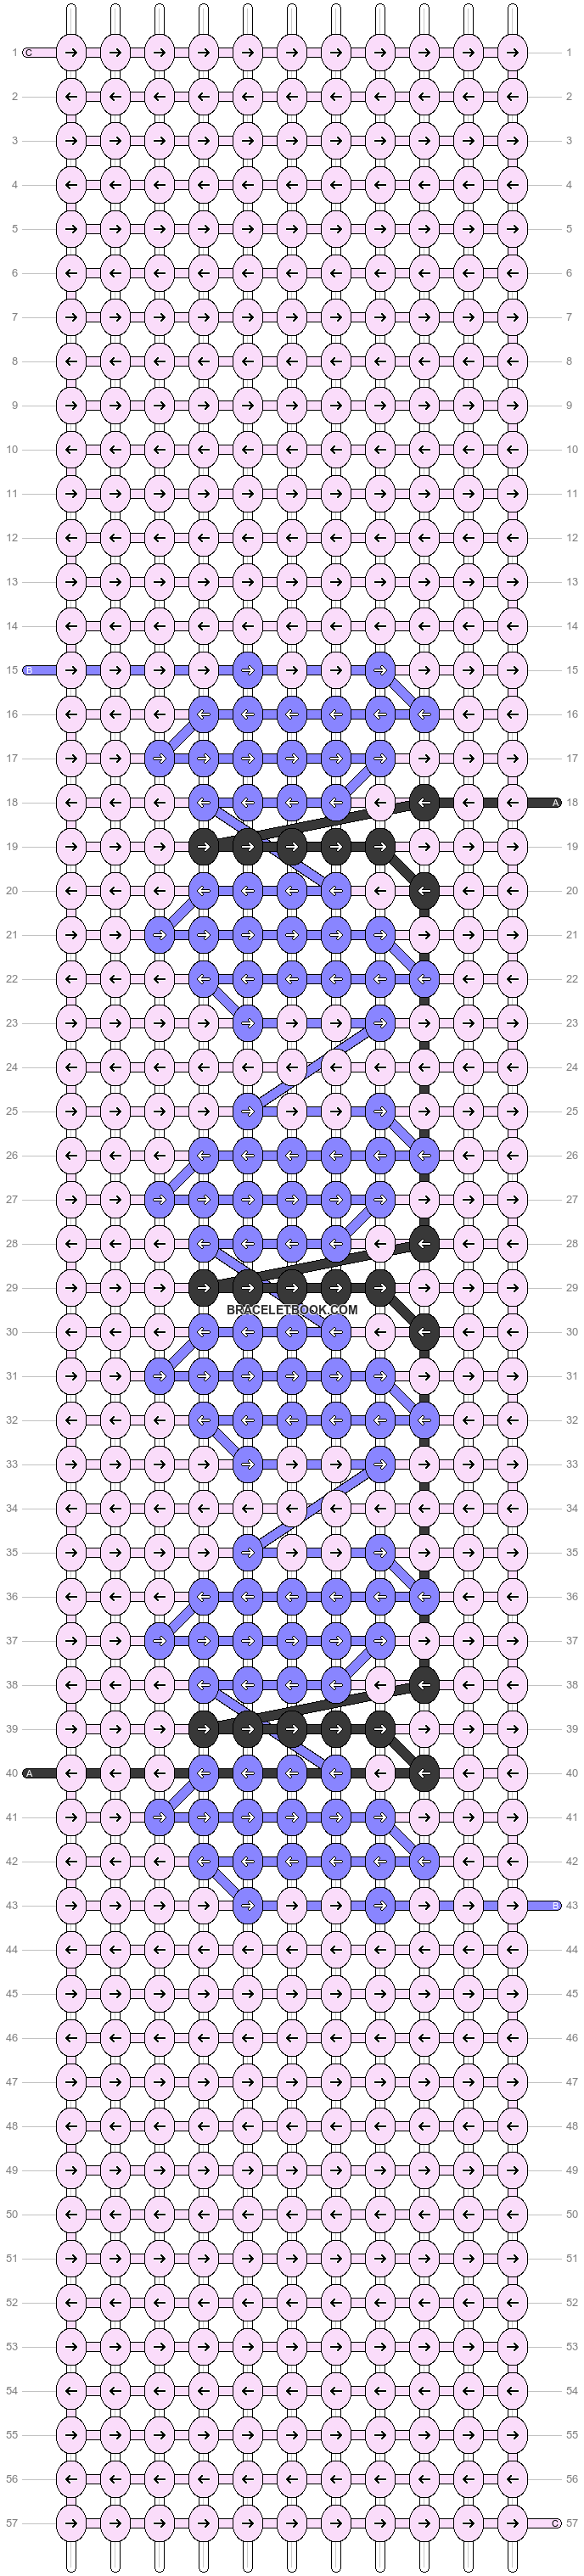 Alpha pattern #51707 pattern